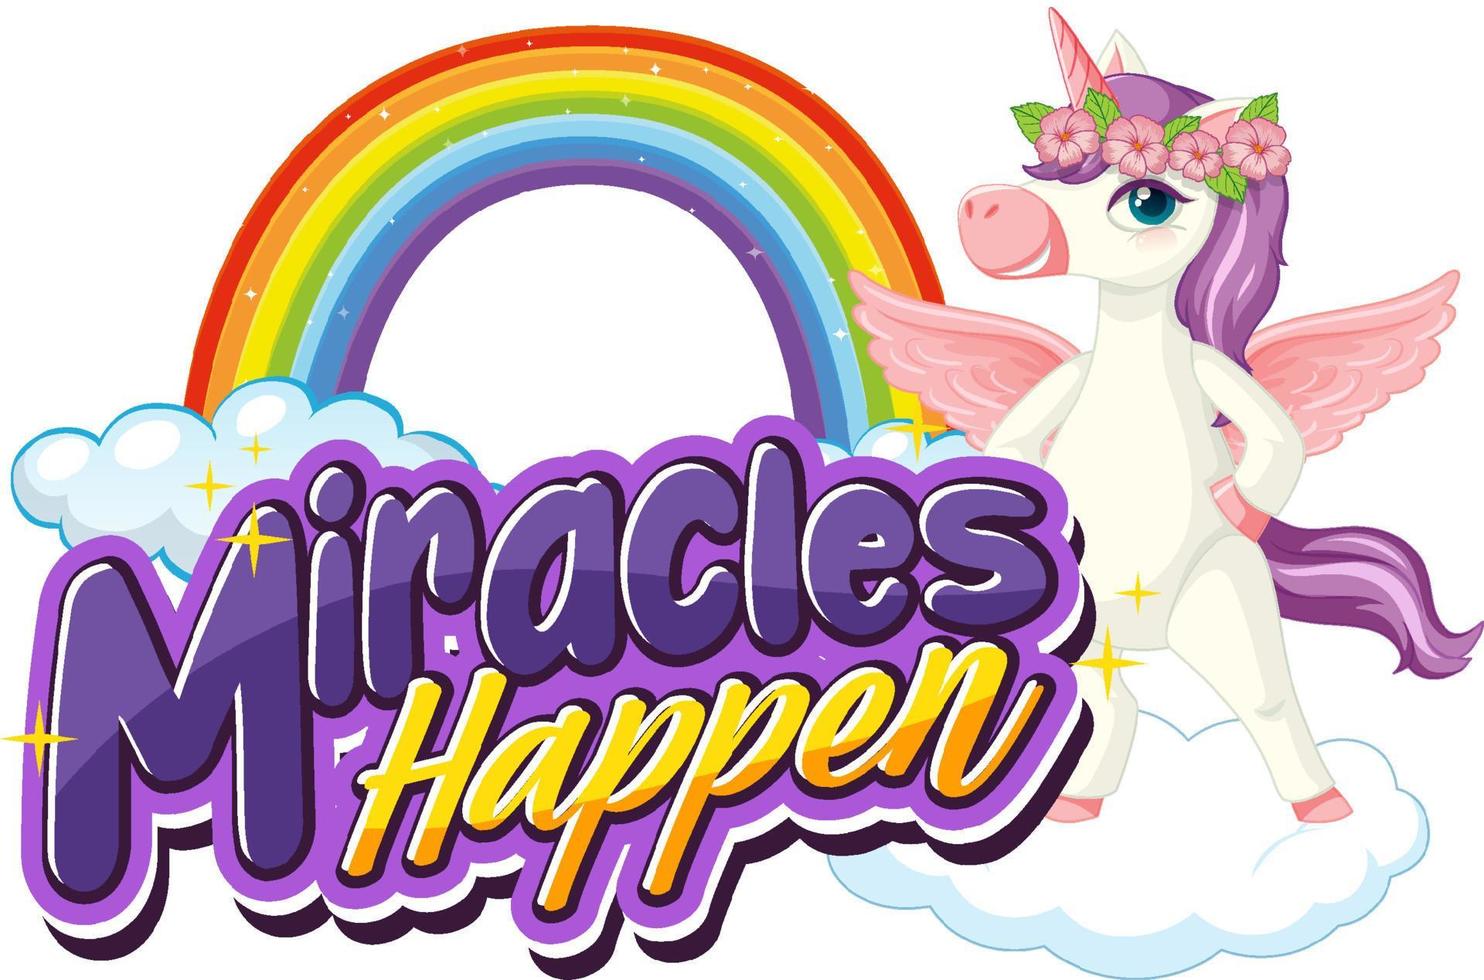 Pegasus cartoon character with Miracles Happen font banner vector